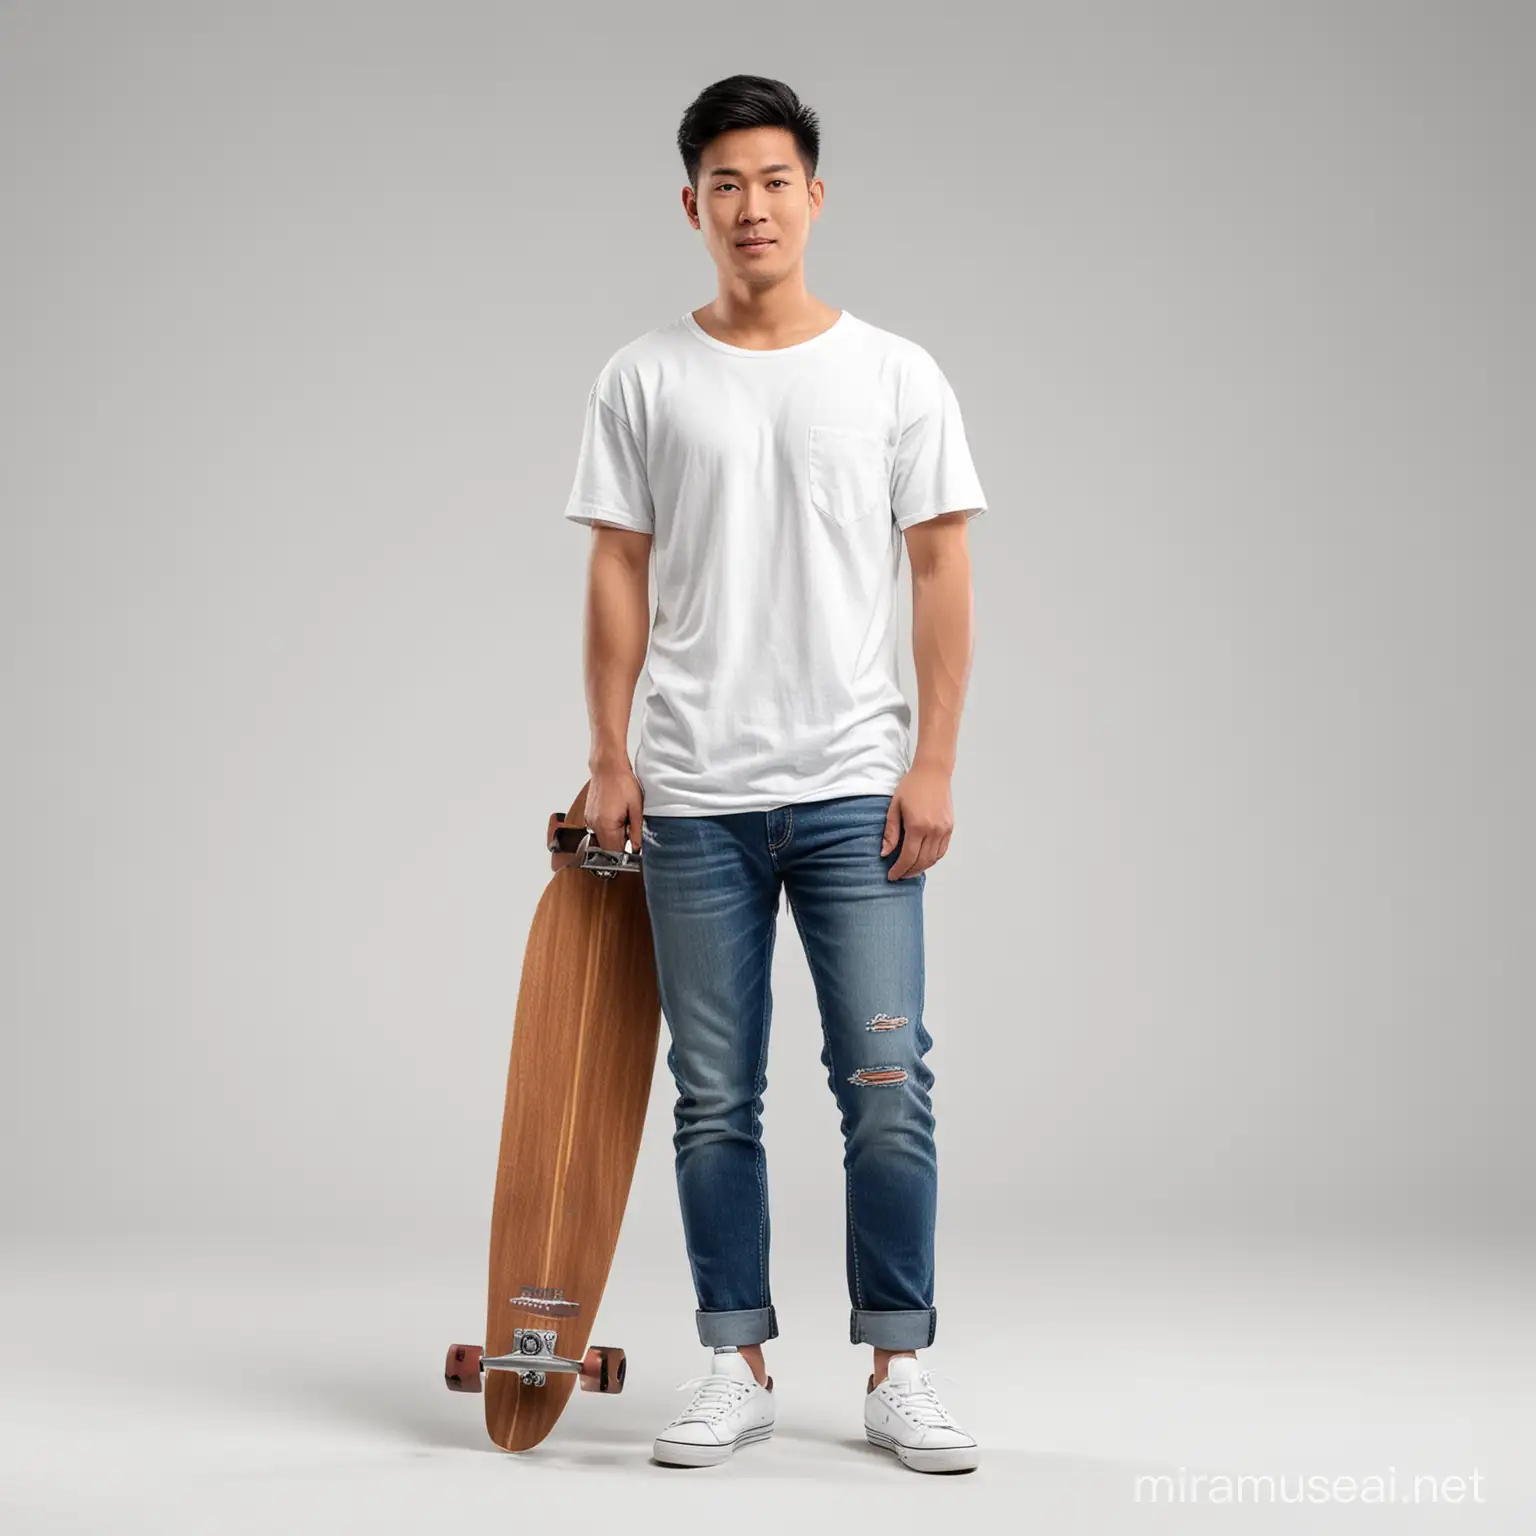 Attractive Asian Man Holding Longboard in Photo Studio